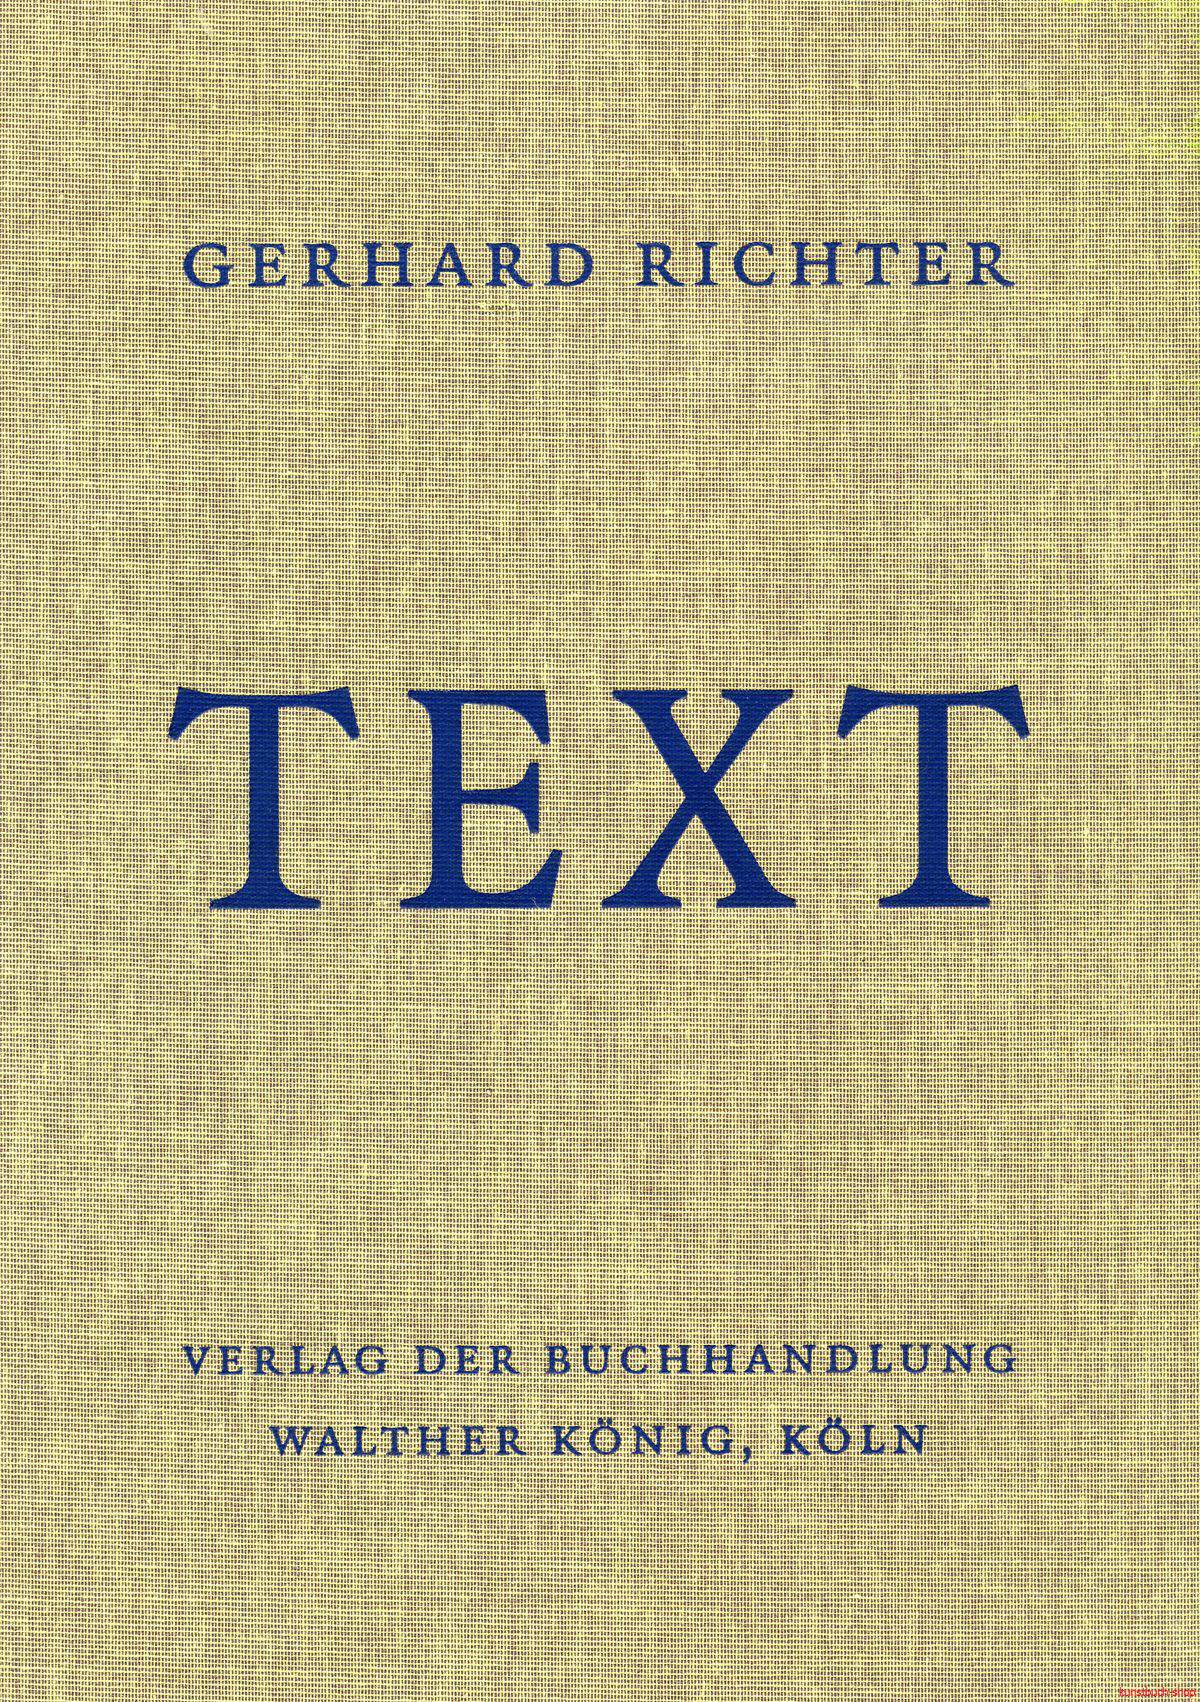 Gerhard Richter. Text 1961 bis 2007